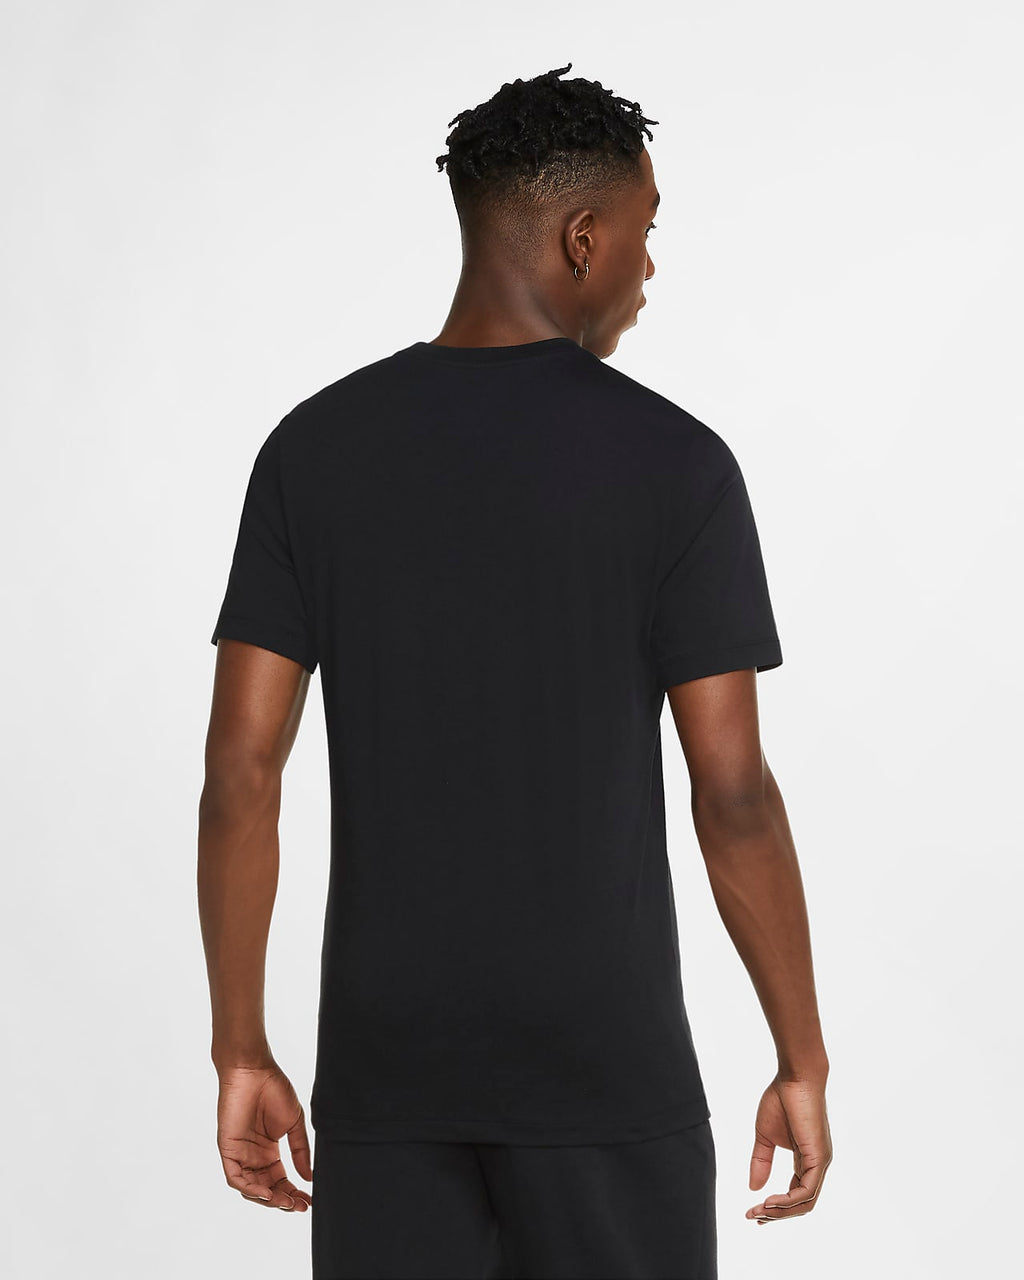 Jordan Winter Utility Men's Short-Sleeve T-Shirt 'Black'